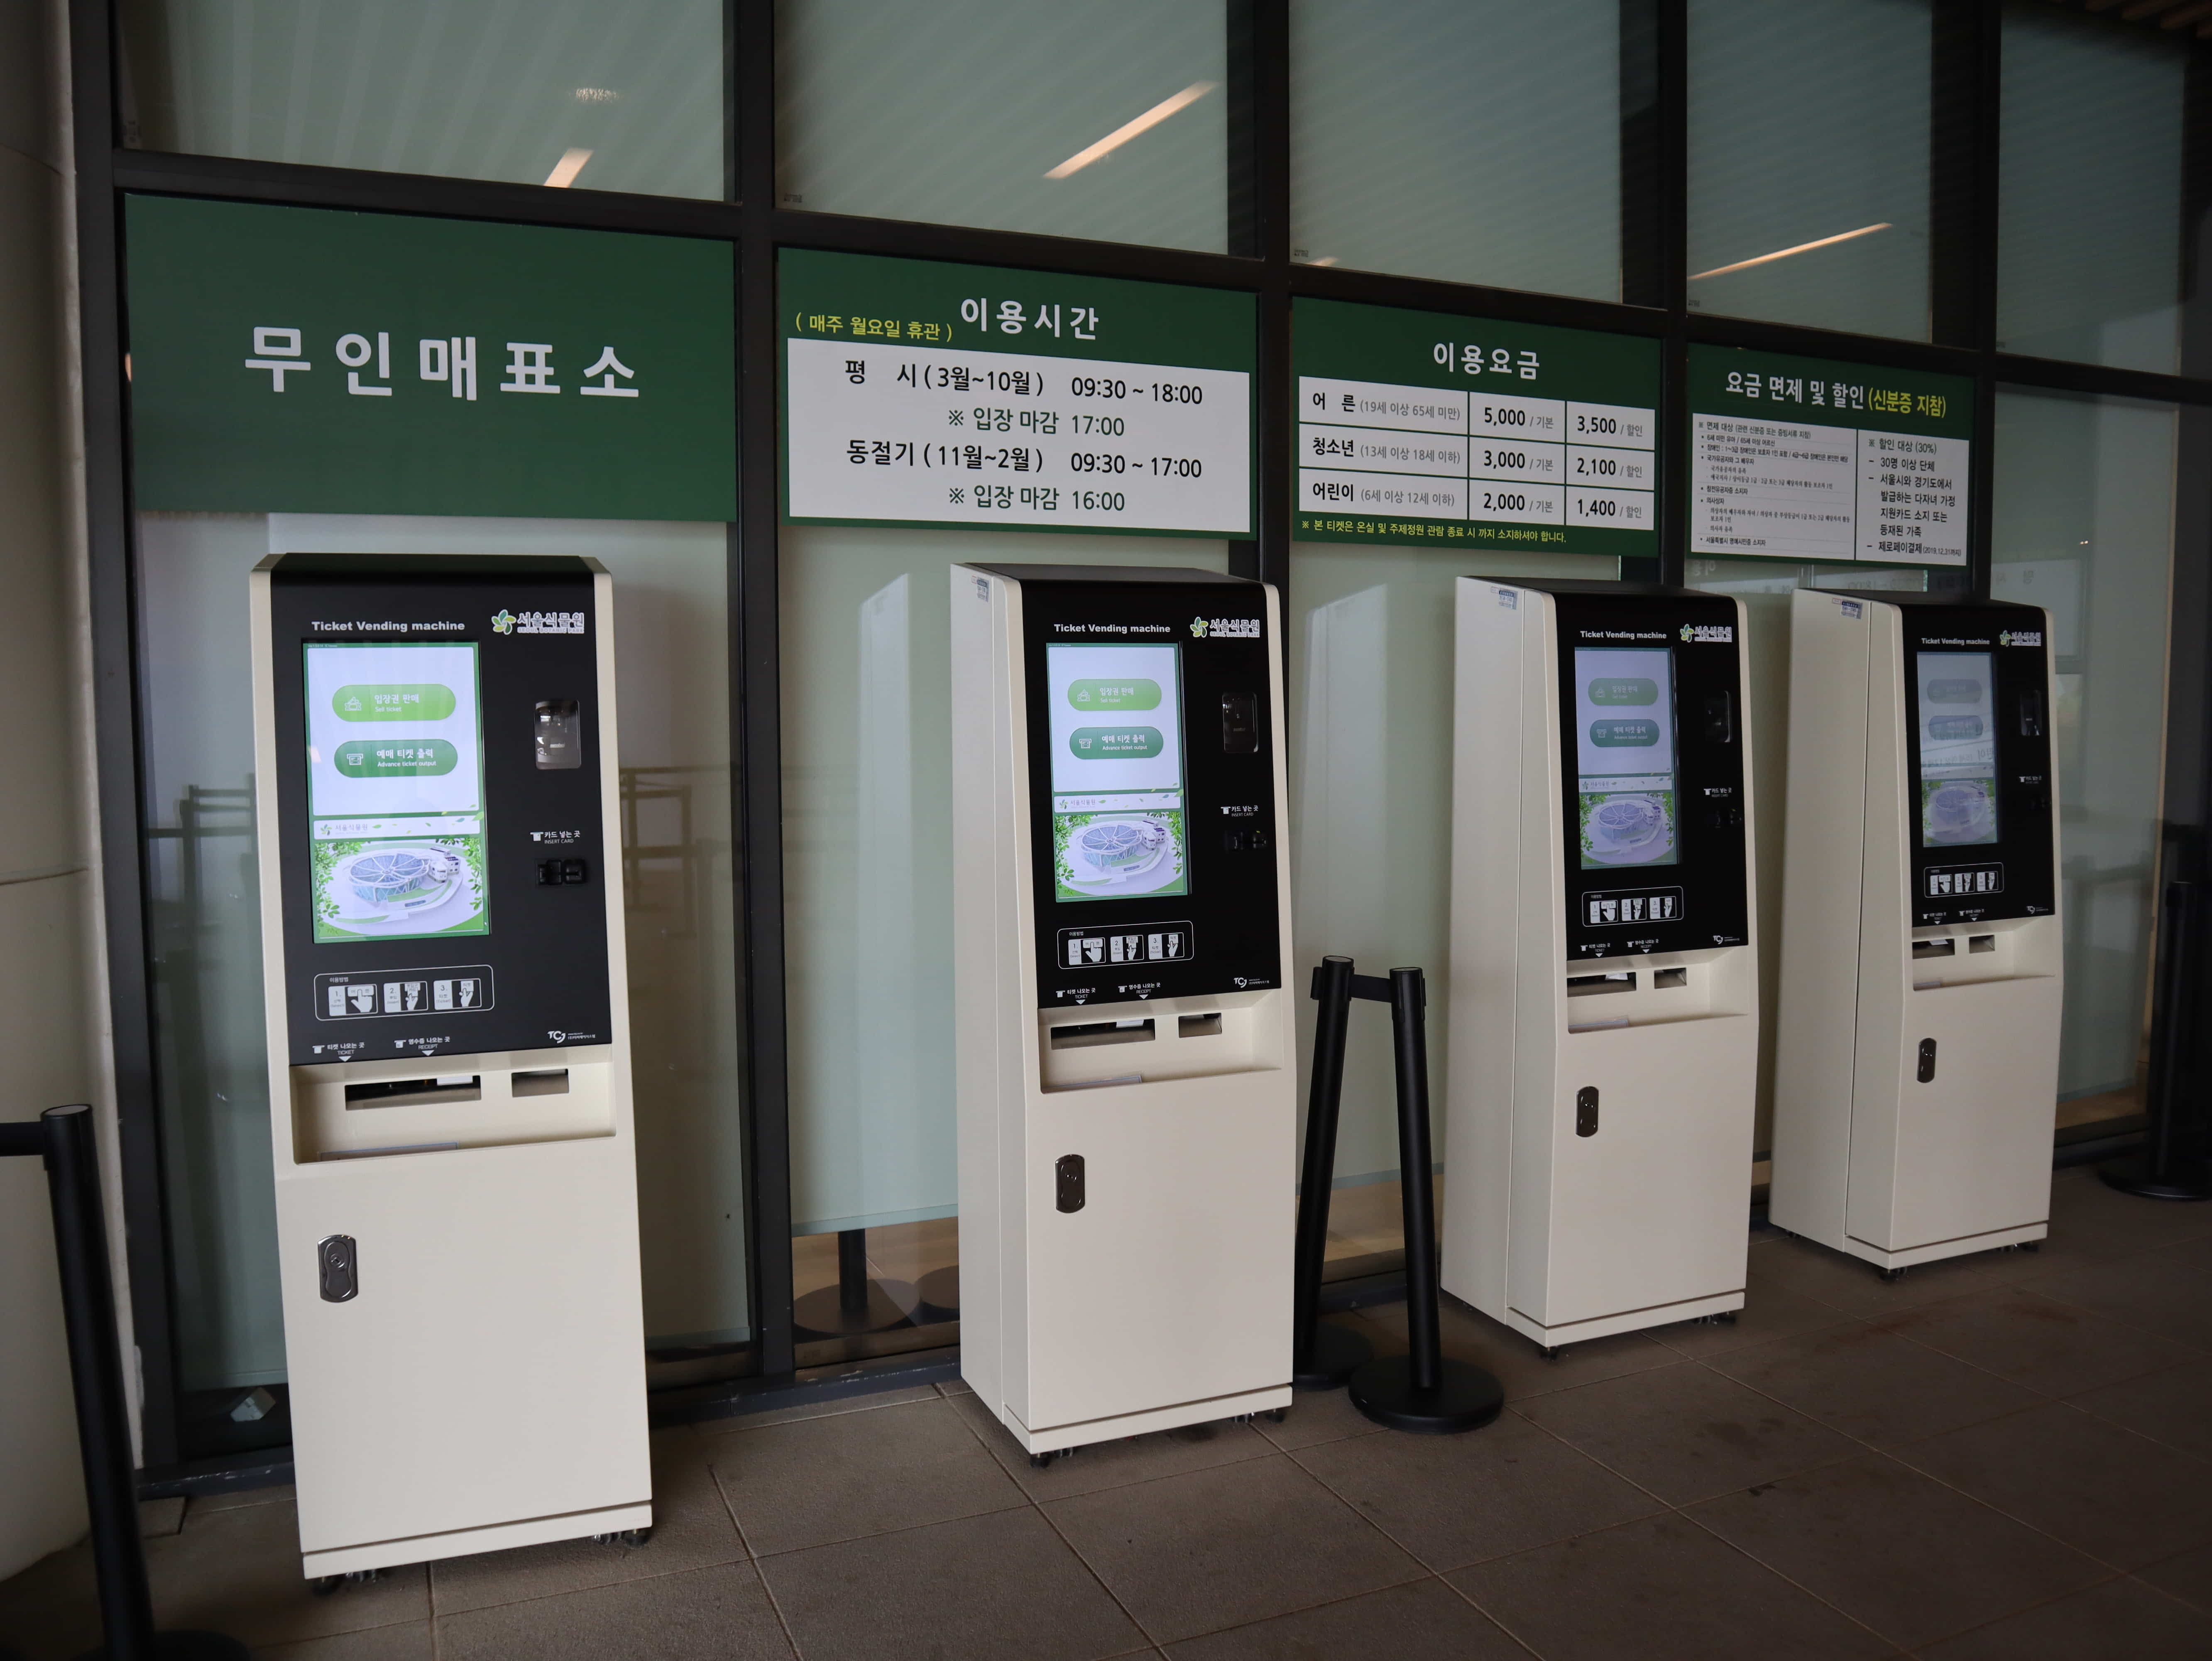 Guide map and information desk0 : Unmanned kiosk ticket office of Seoul Botanic Park
